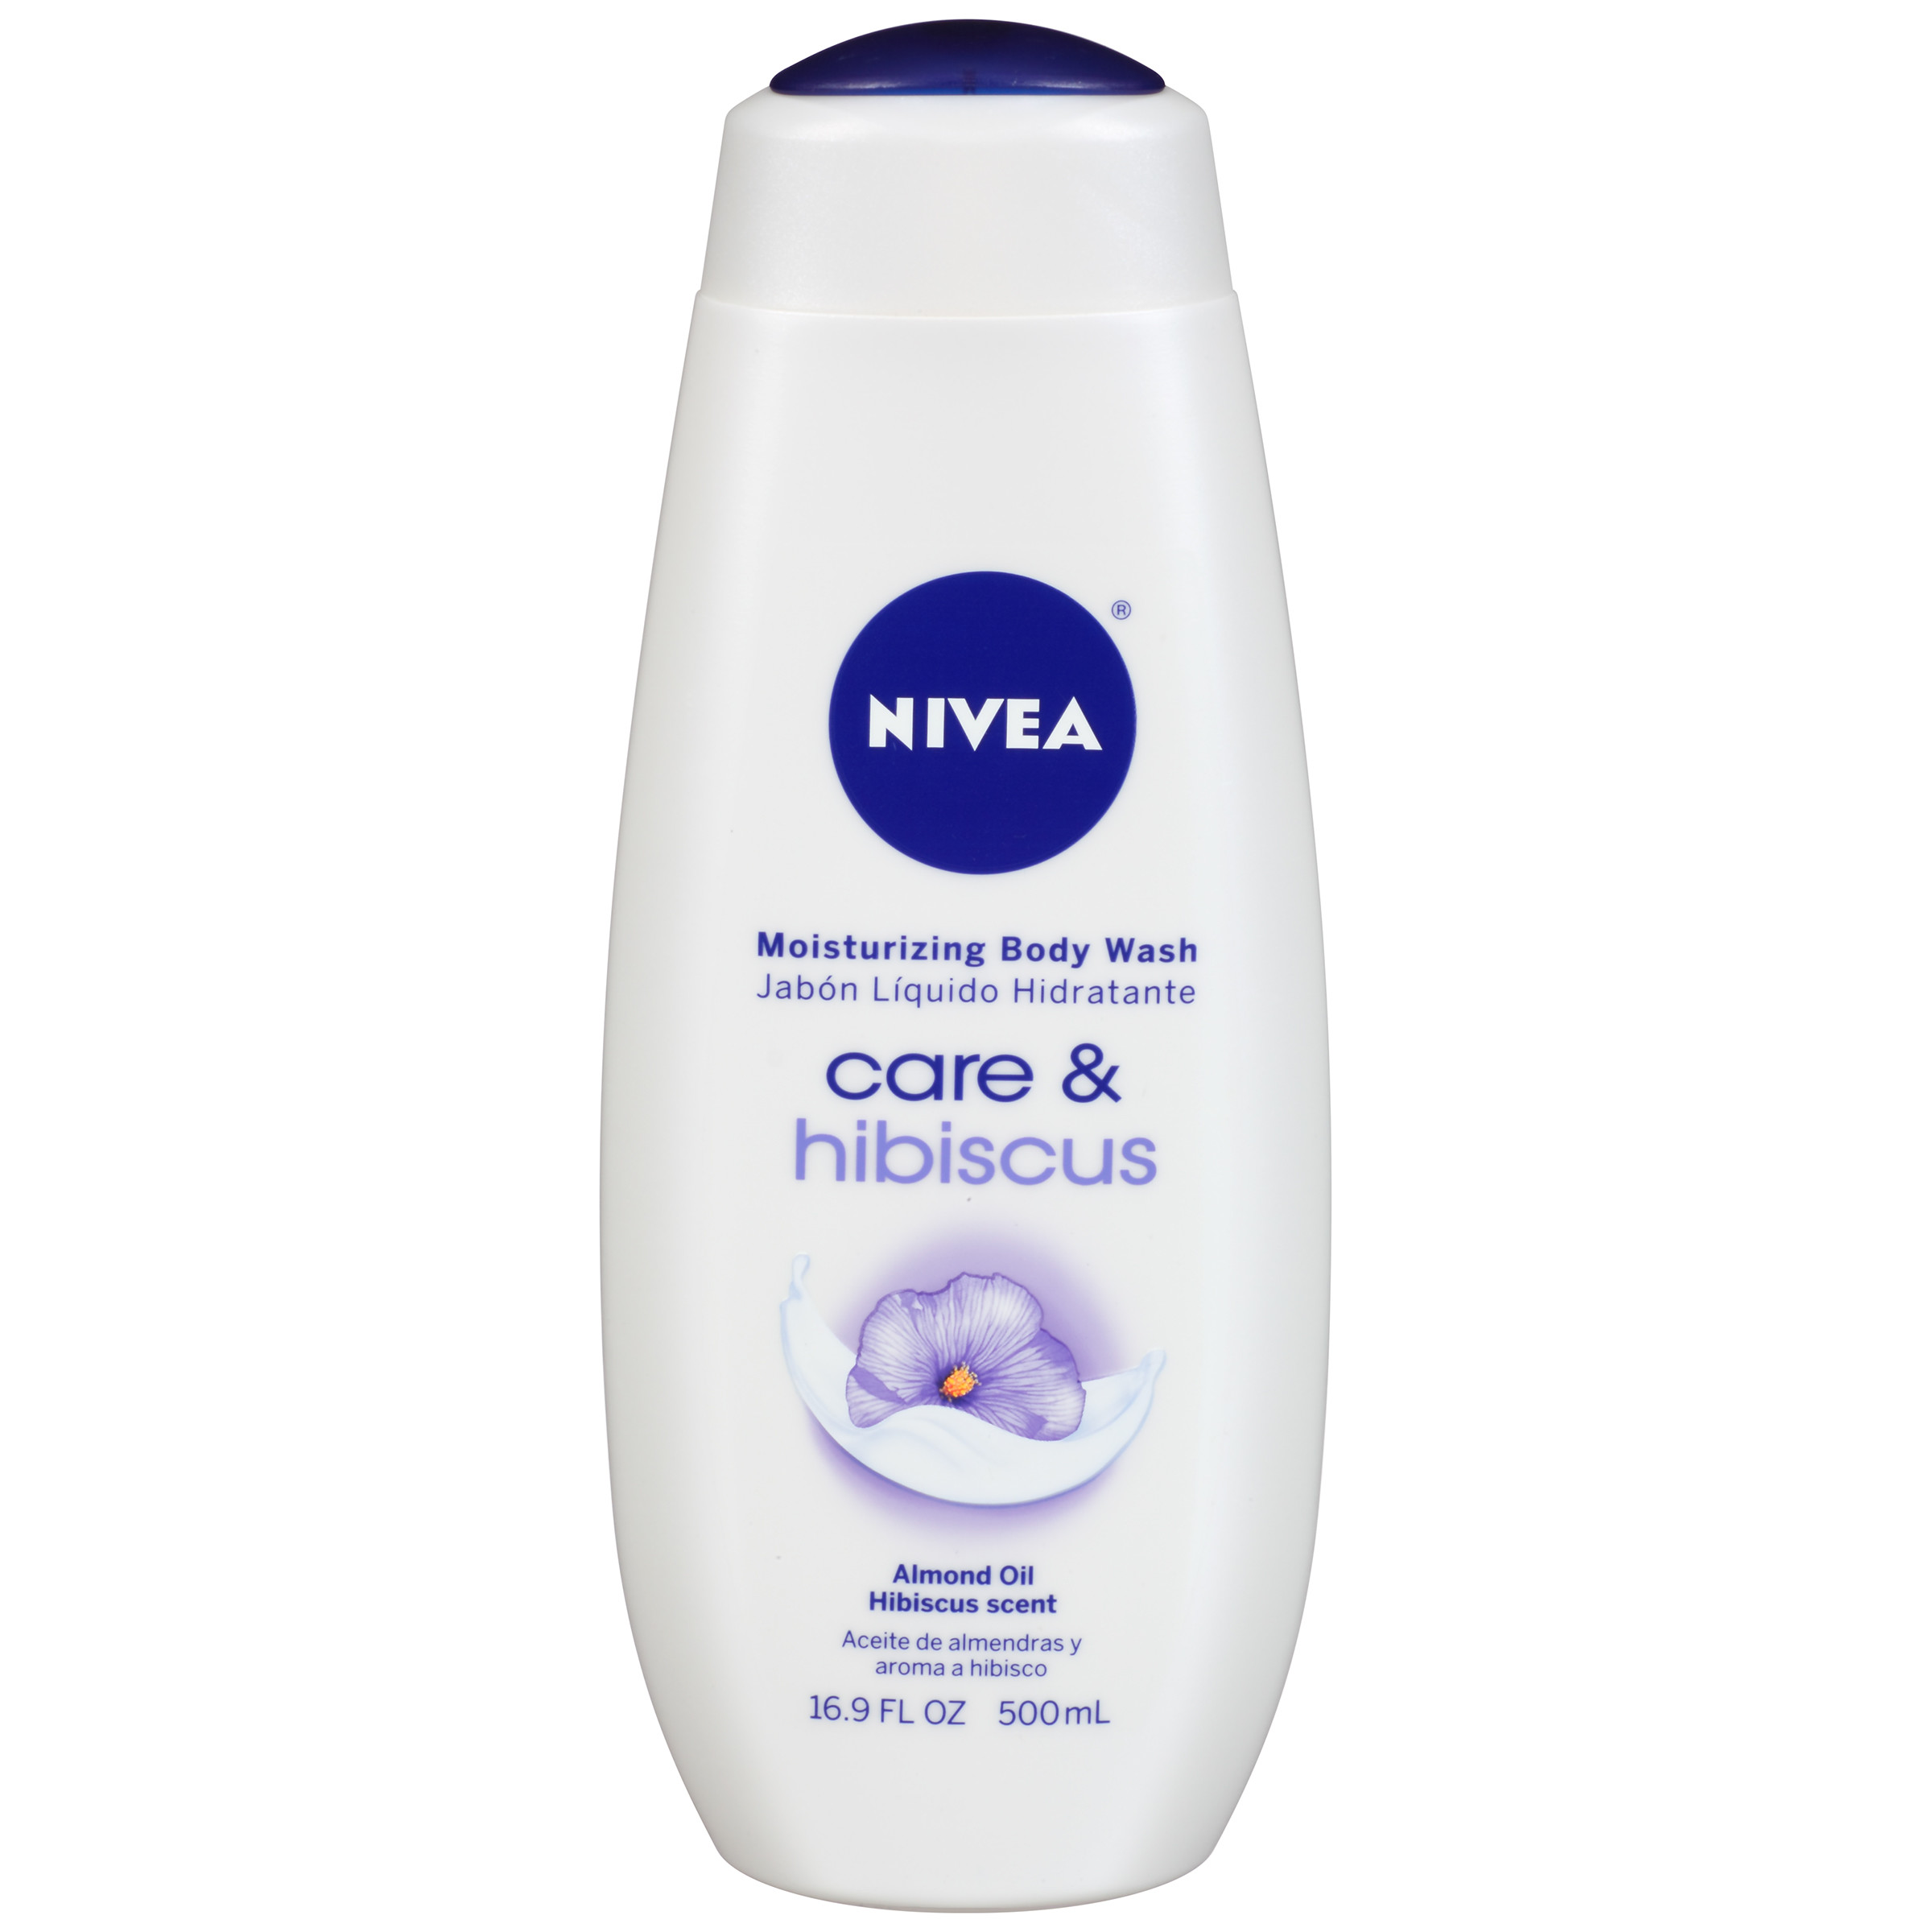 NIVEA Care and Hibiscus Moisturizing Body Wash 16.9 fl. oz. - image 1 of 2